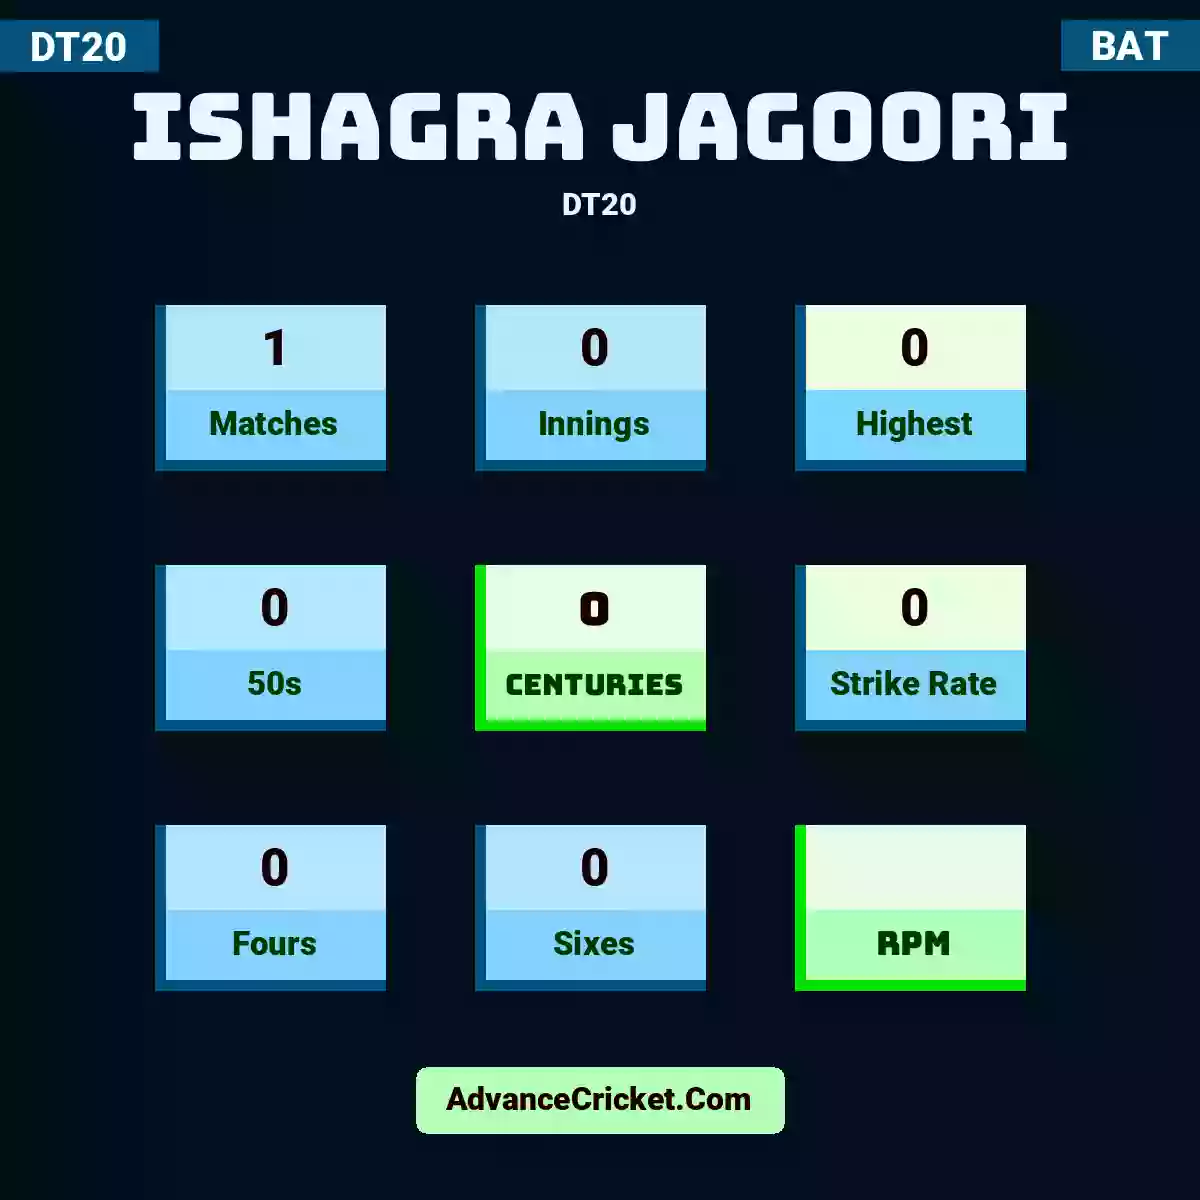 Ishagra Jagoori DT20 , Ishagra Jagoori played 1 matches, scored 0 runs as highest, 0 half-centuries, and 0 centuries, with a strike rate of 0. I.Jagoori hit 0 fours and 0 sixes.